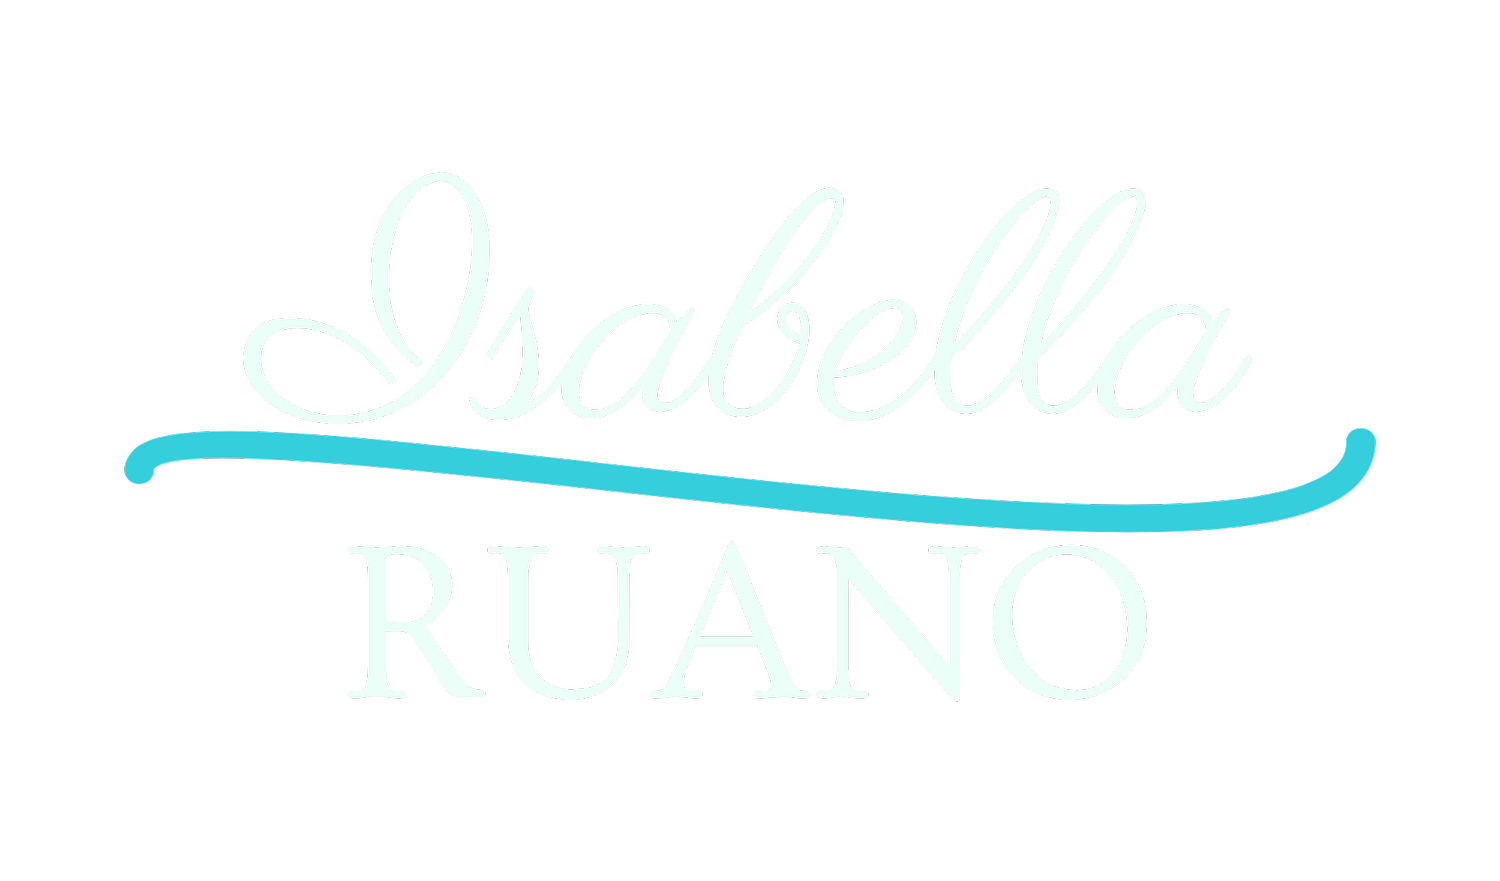 Isabella Ruano